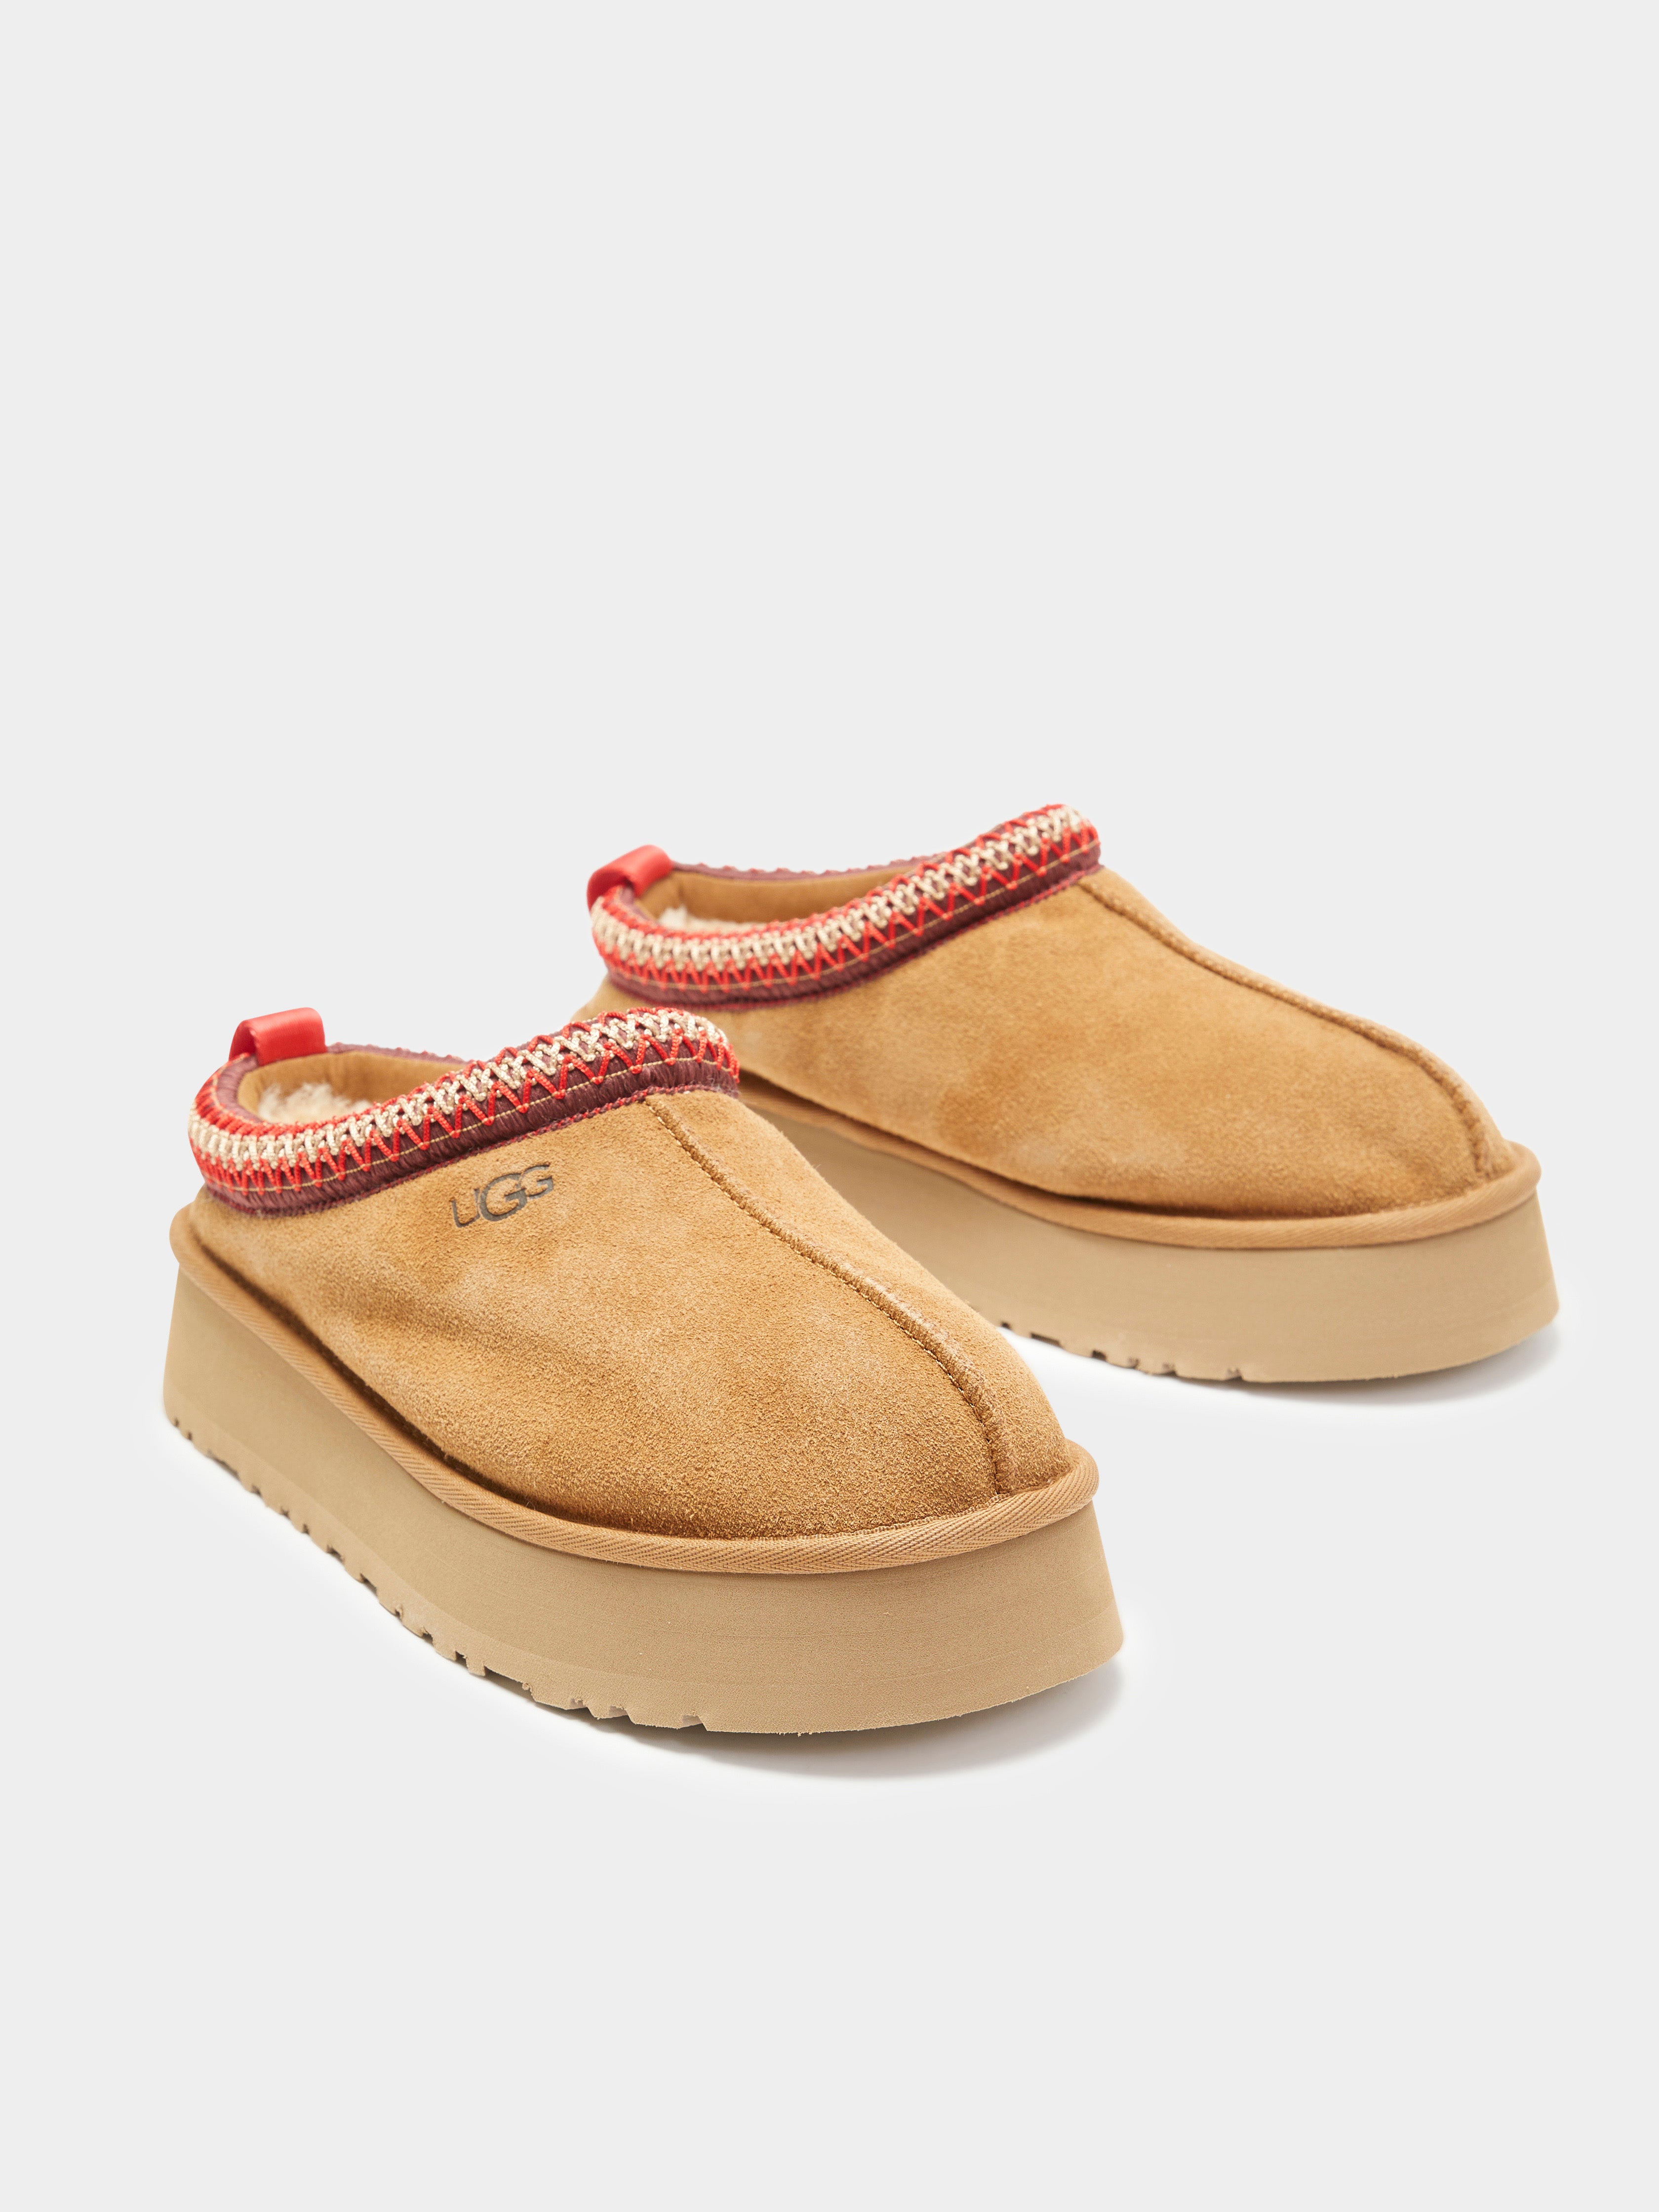 Womens Tazz Platform Slip-On Shoes in Chestnut Brown